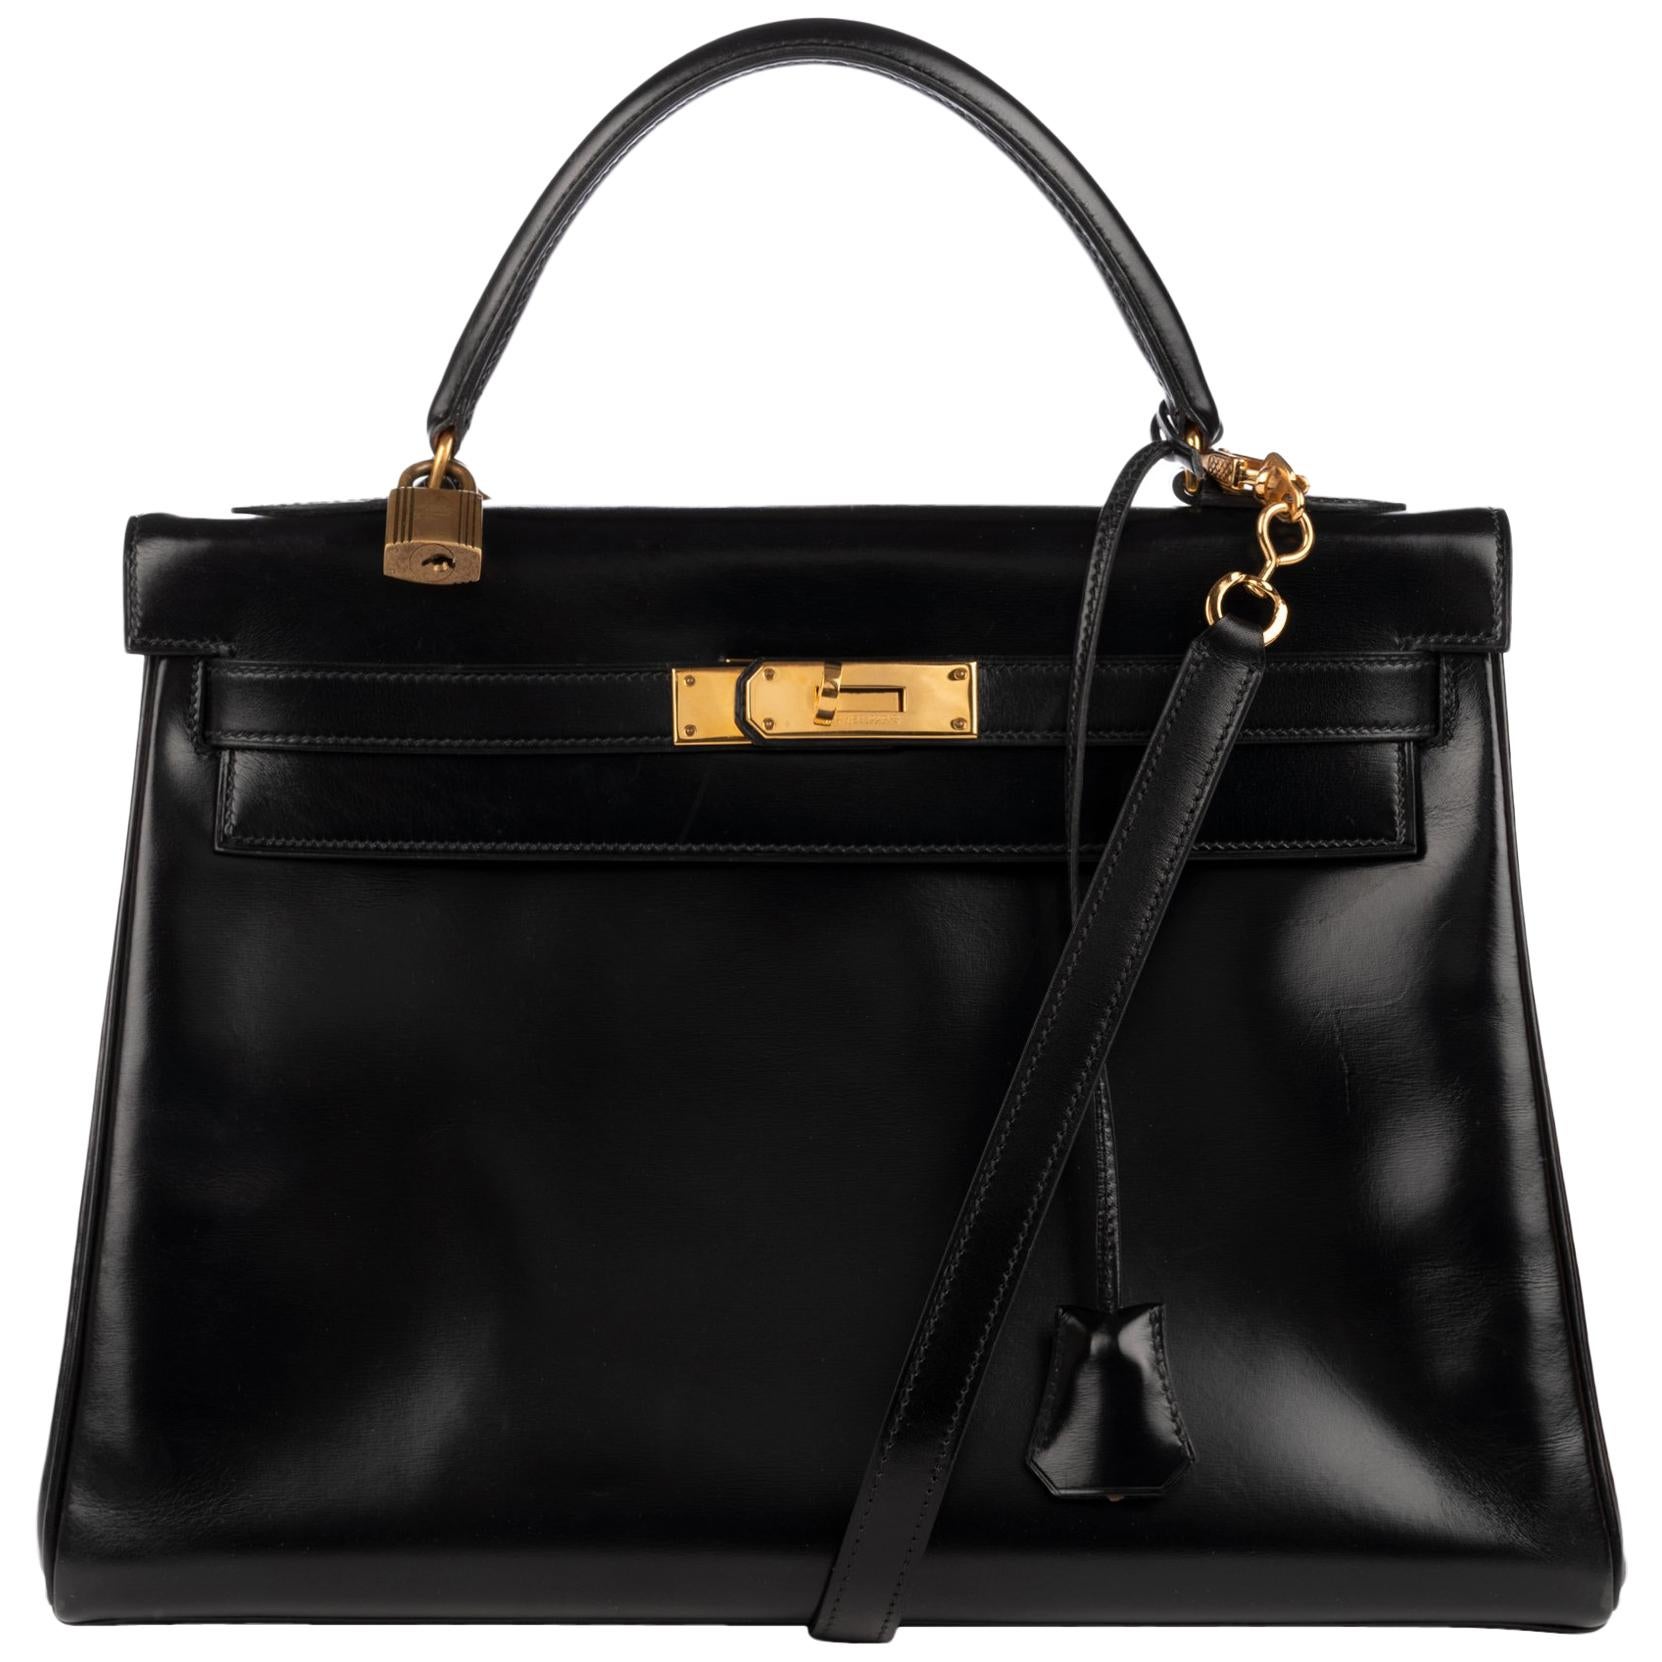 Hermes Kelly 32cm Black Box Leather Handbag